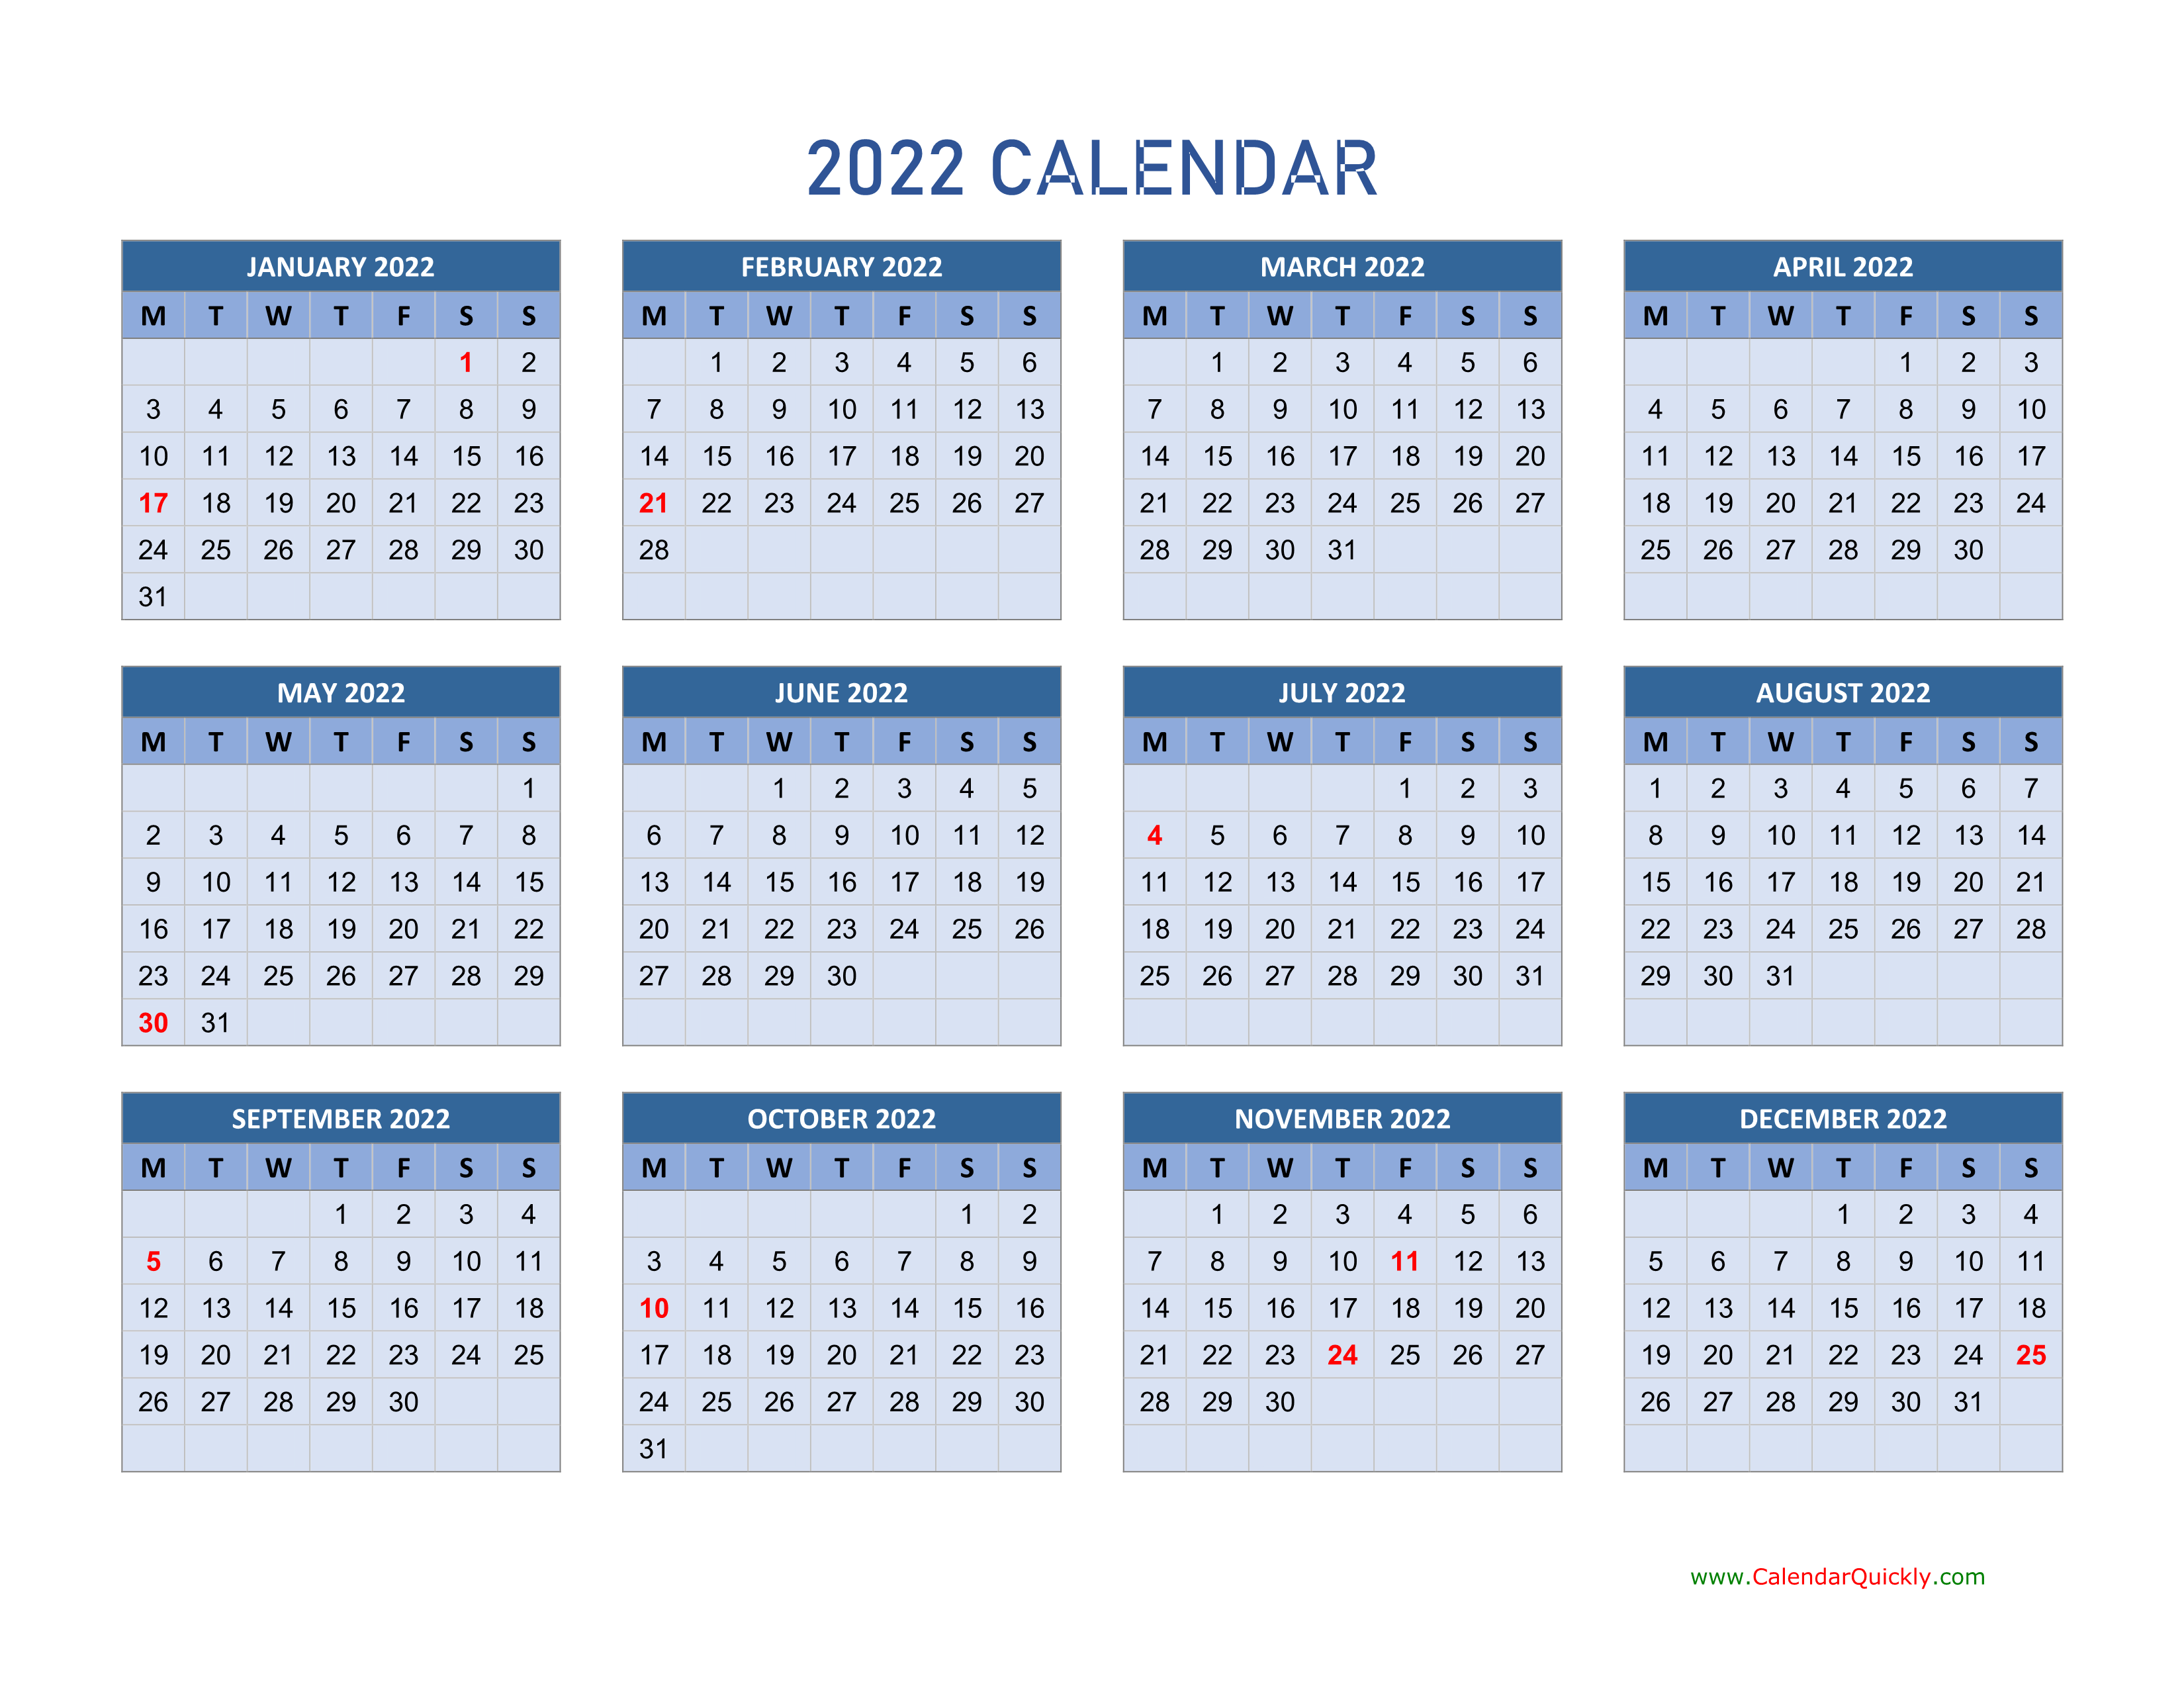 monday-2022-calendar-horizontal-calendar-quickly